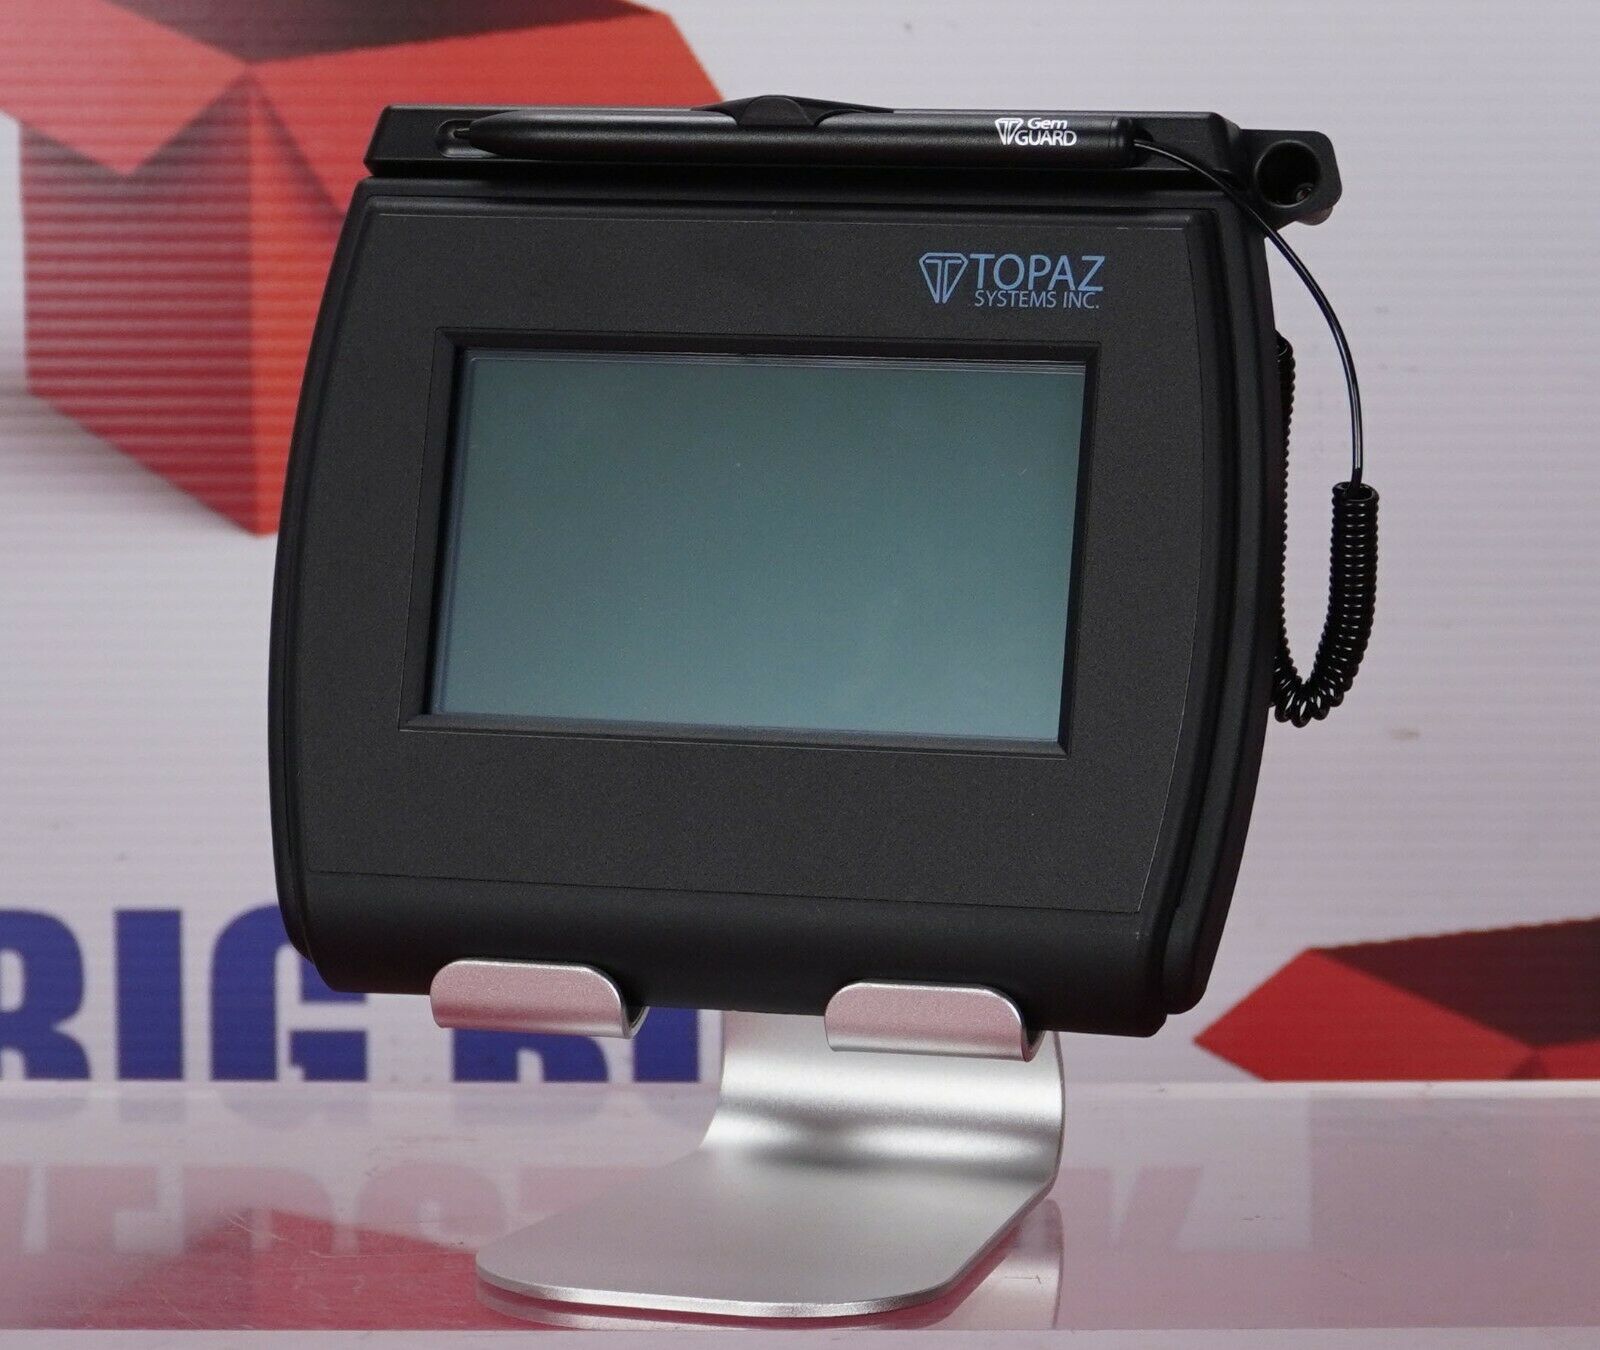 Topaz T-LBK750-BHSB-R SigLite LCD 4x3 Electronic Signature Pad